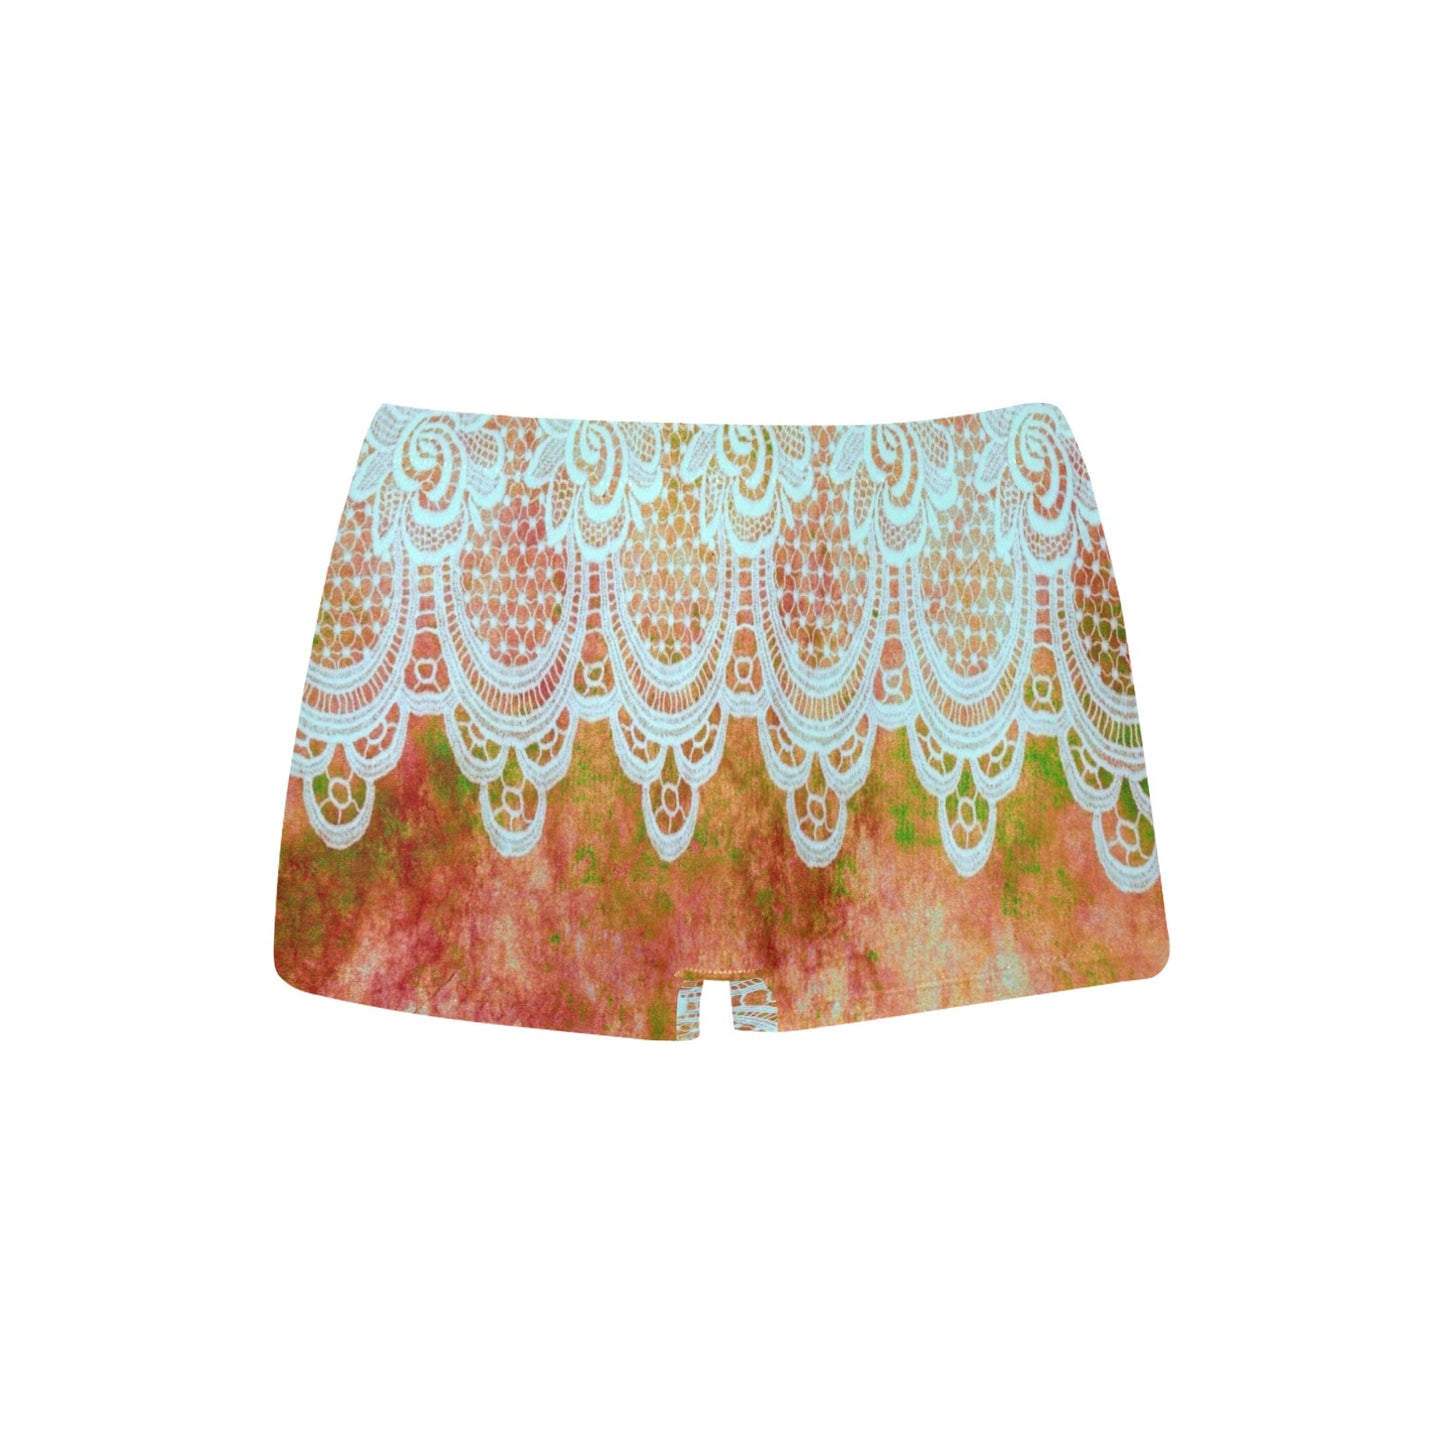 Printed Lace Boyshorts, daisy dukes, pum pum shorts, shortie shorts , design 31